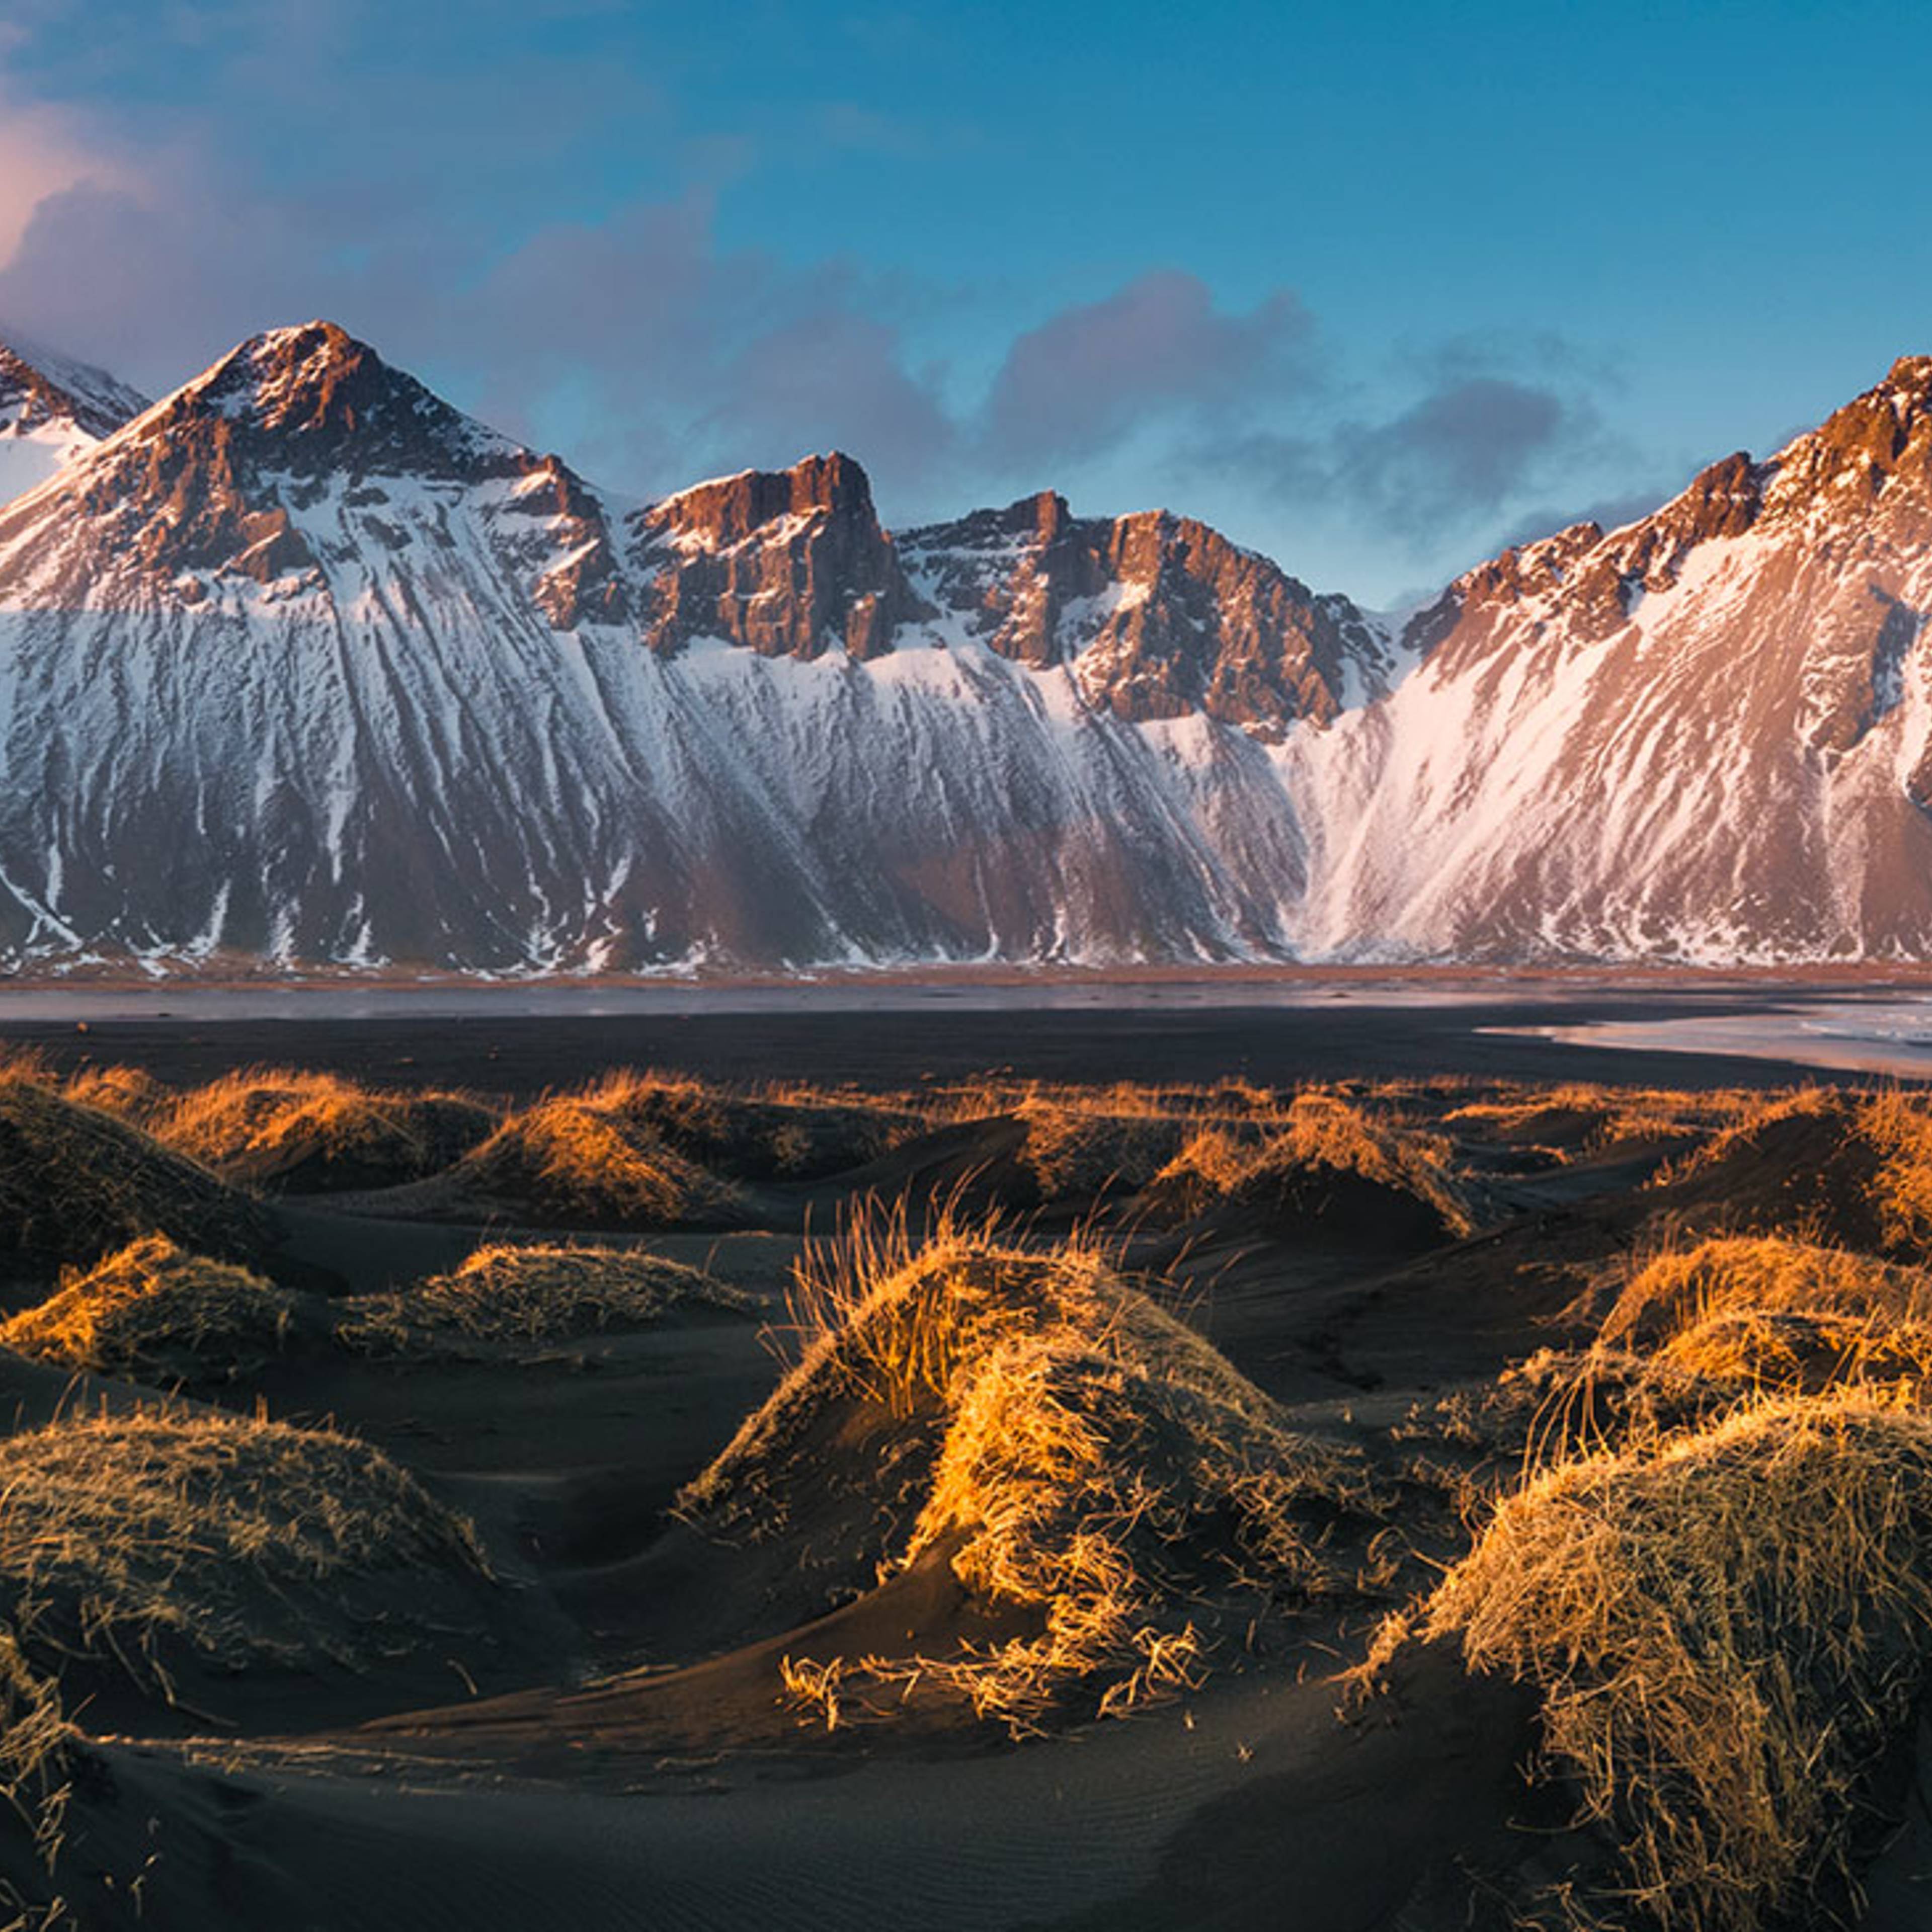 Viajar a Islandia